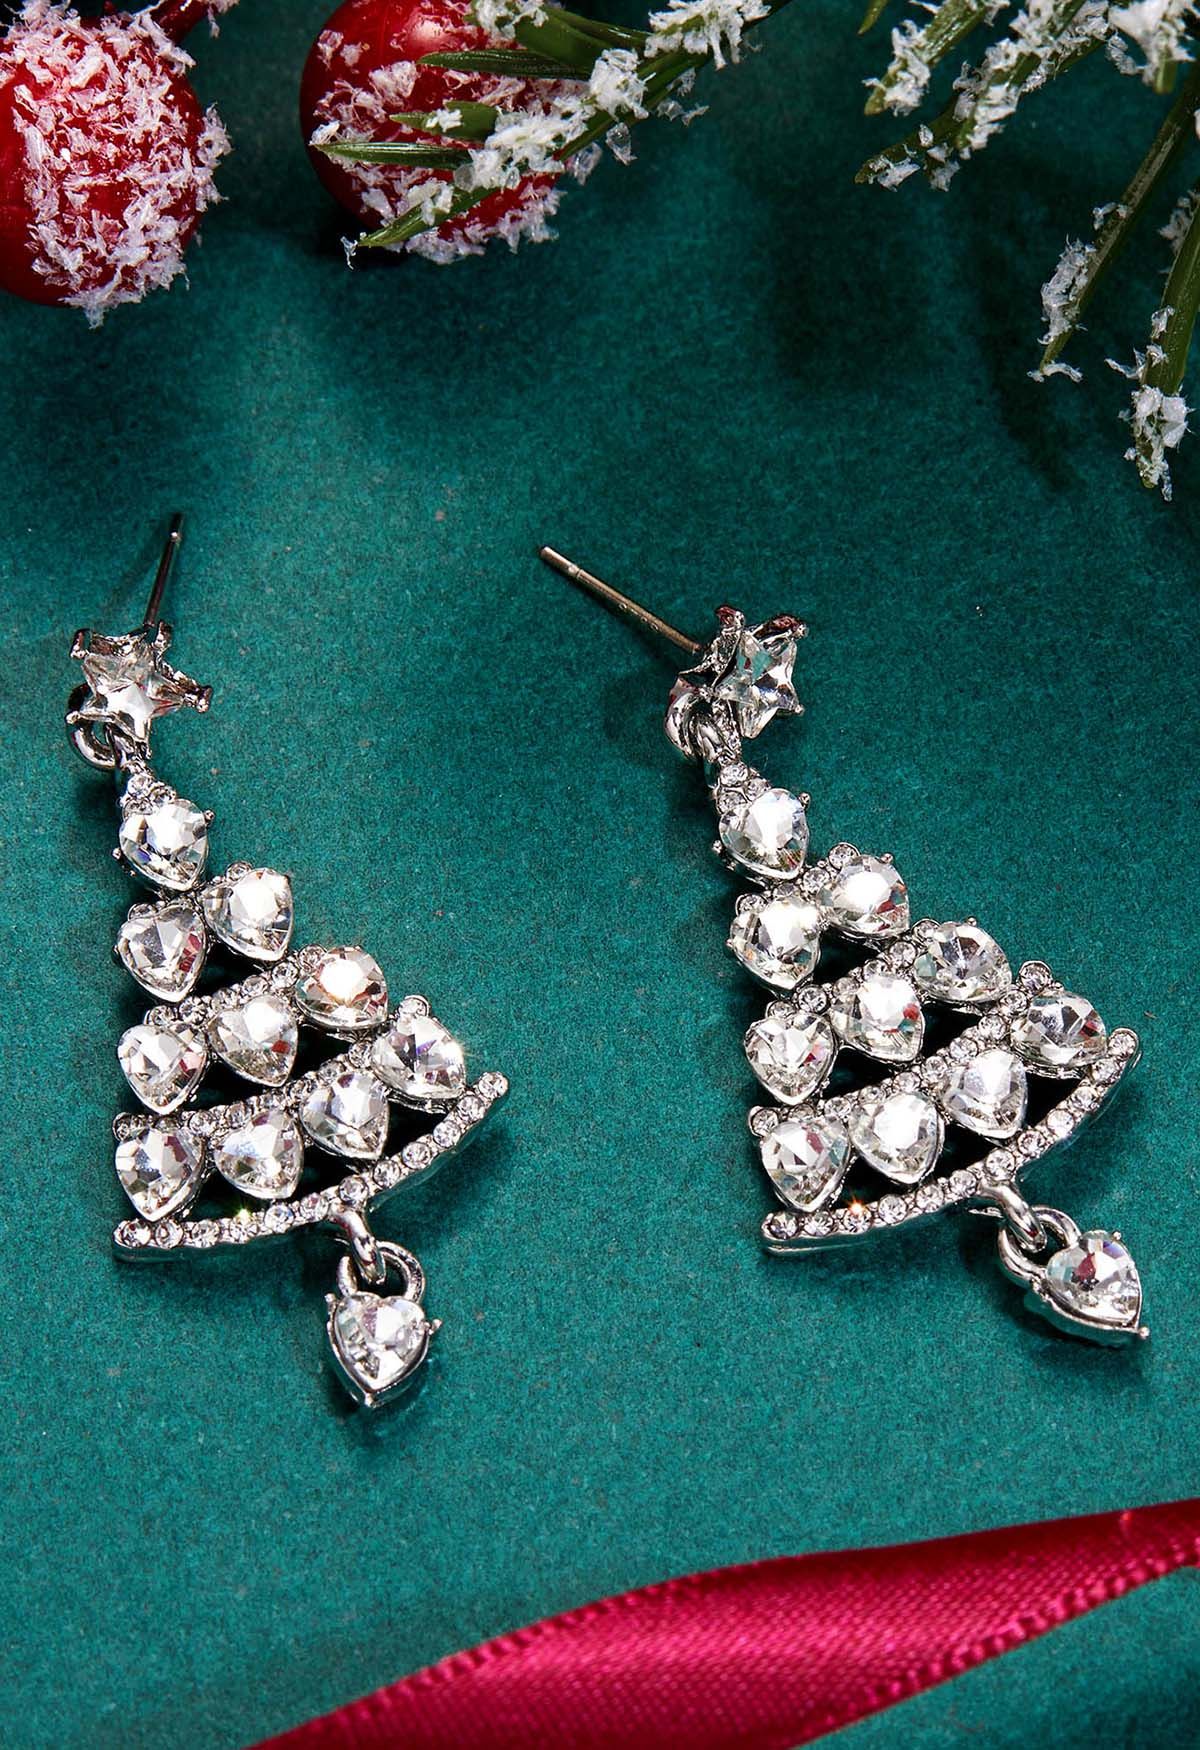 Full Rhinestone Christmas Tree Earrings in Silver